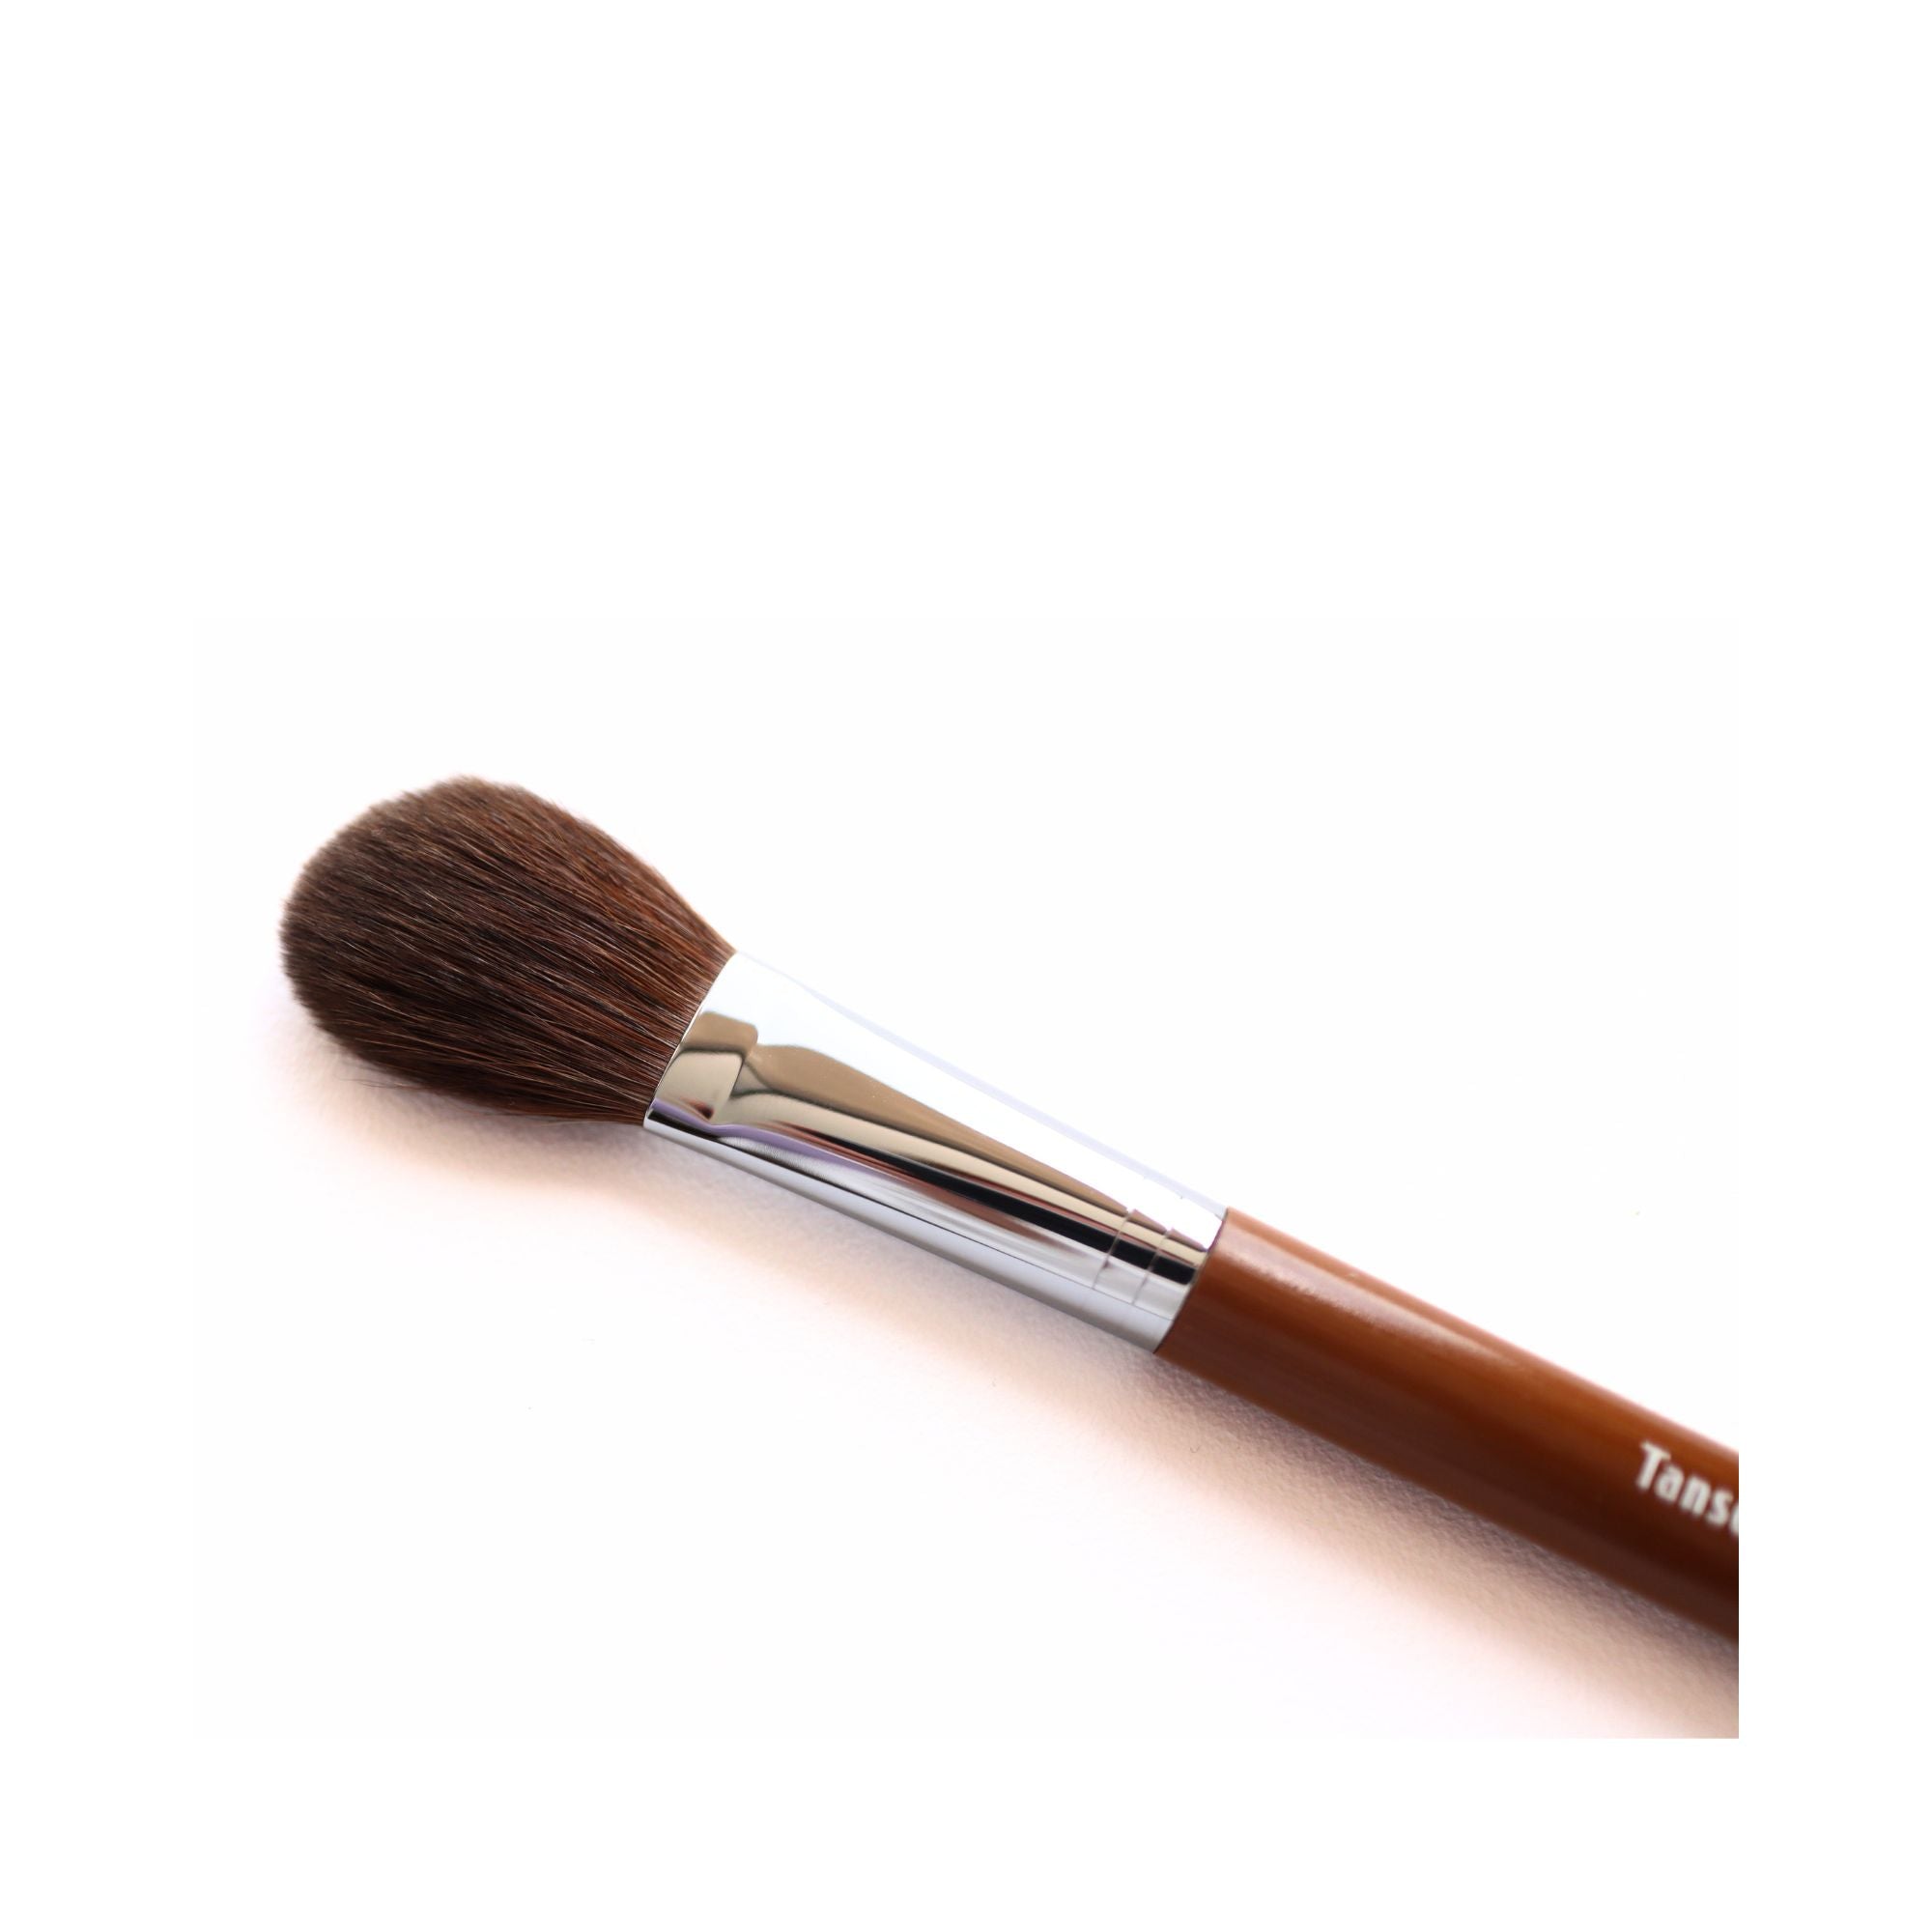 Tanseido Small Cheek Brush, Take 竹 'Bamboo' Series (AQ17TAKE) - Fude Beauty, Japanese Makeup Brushes